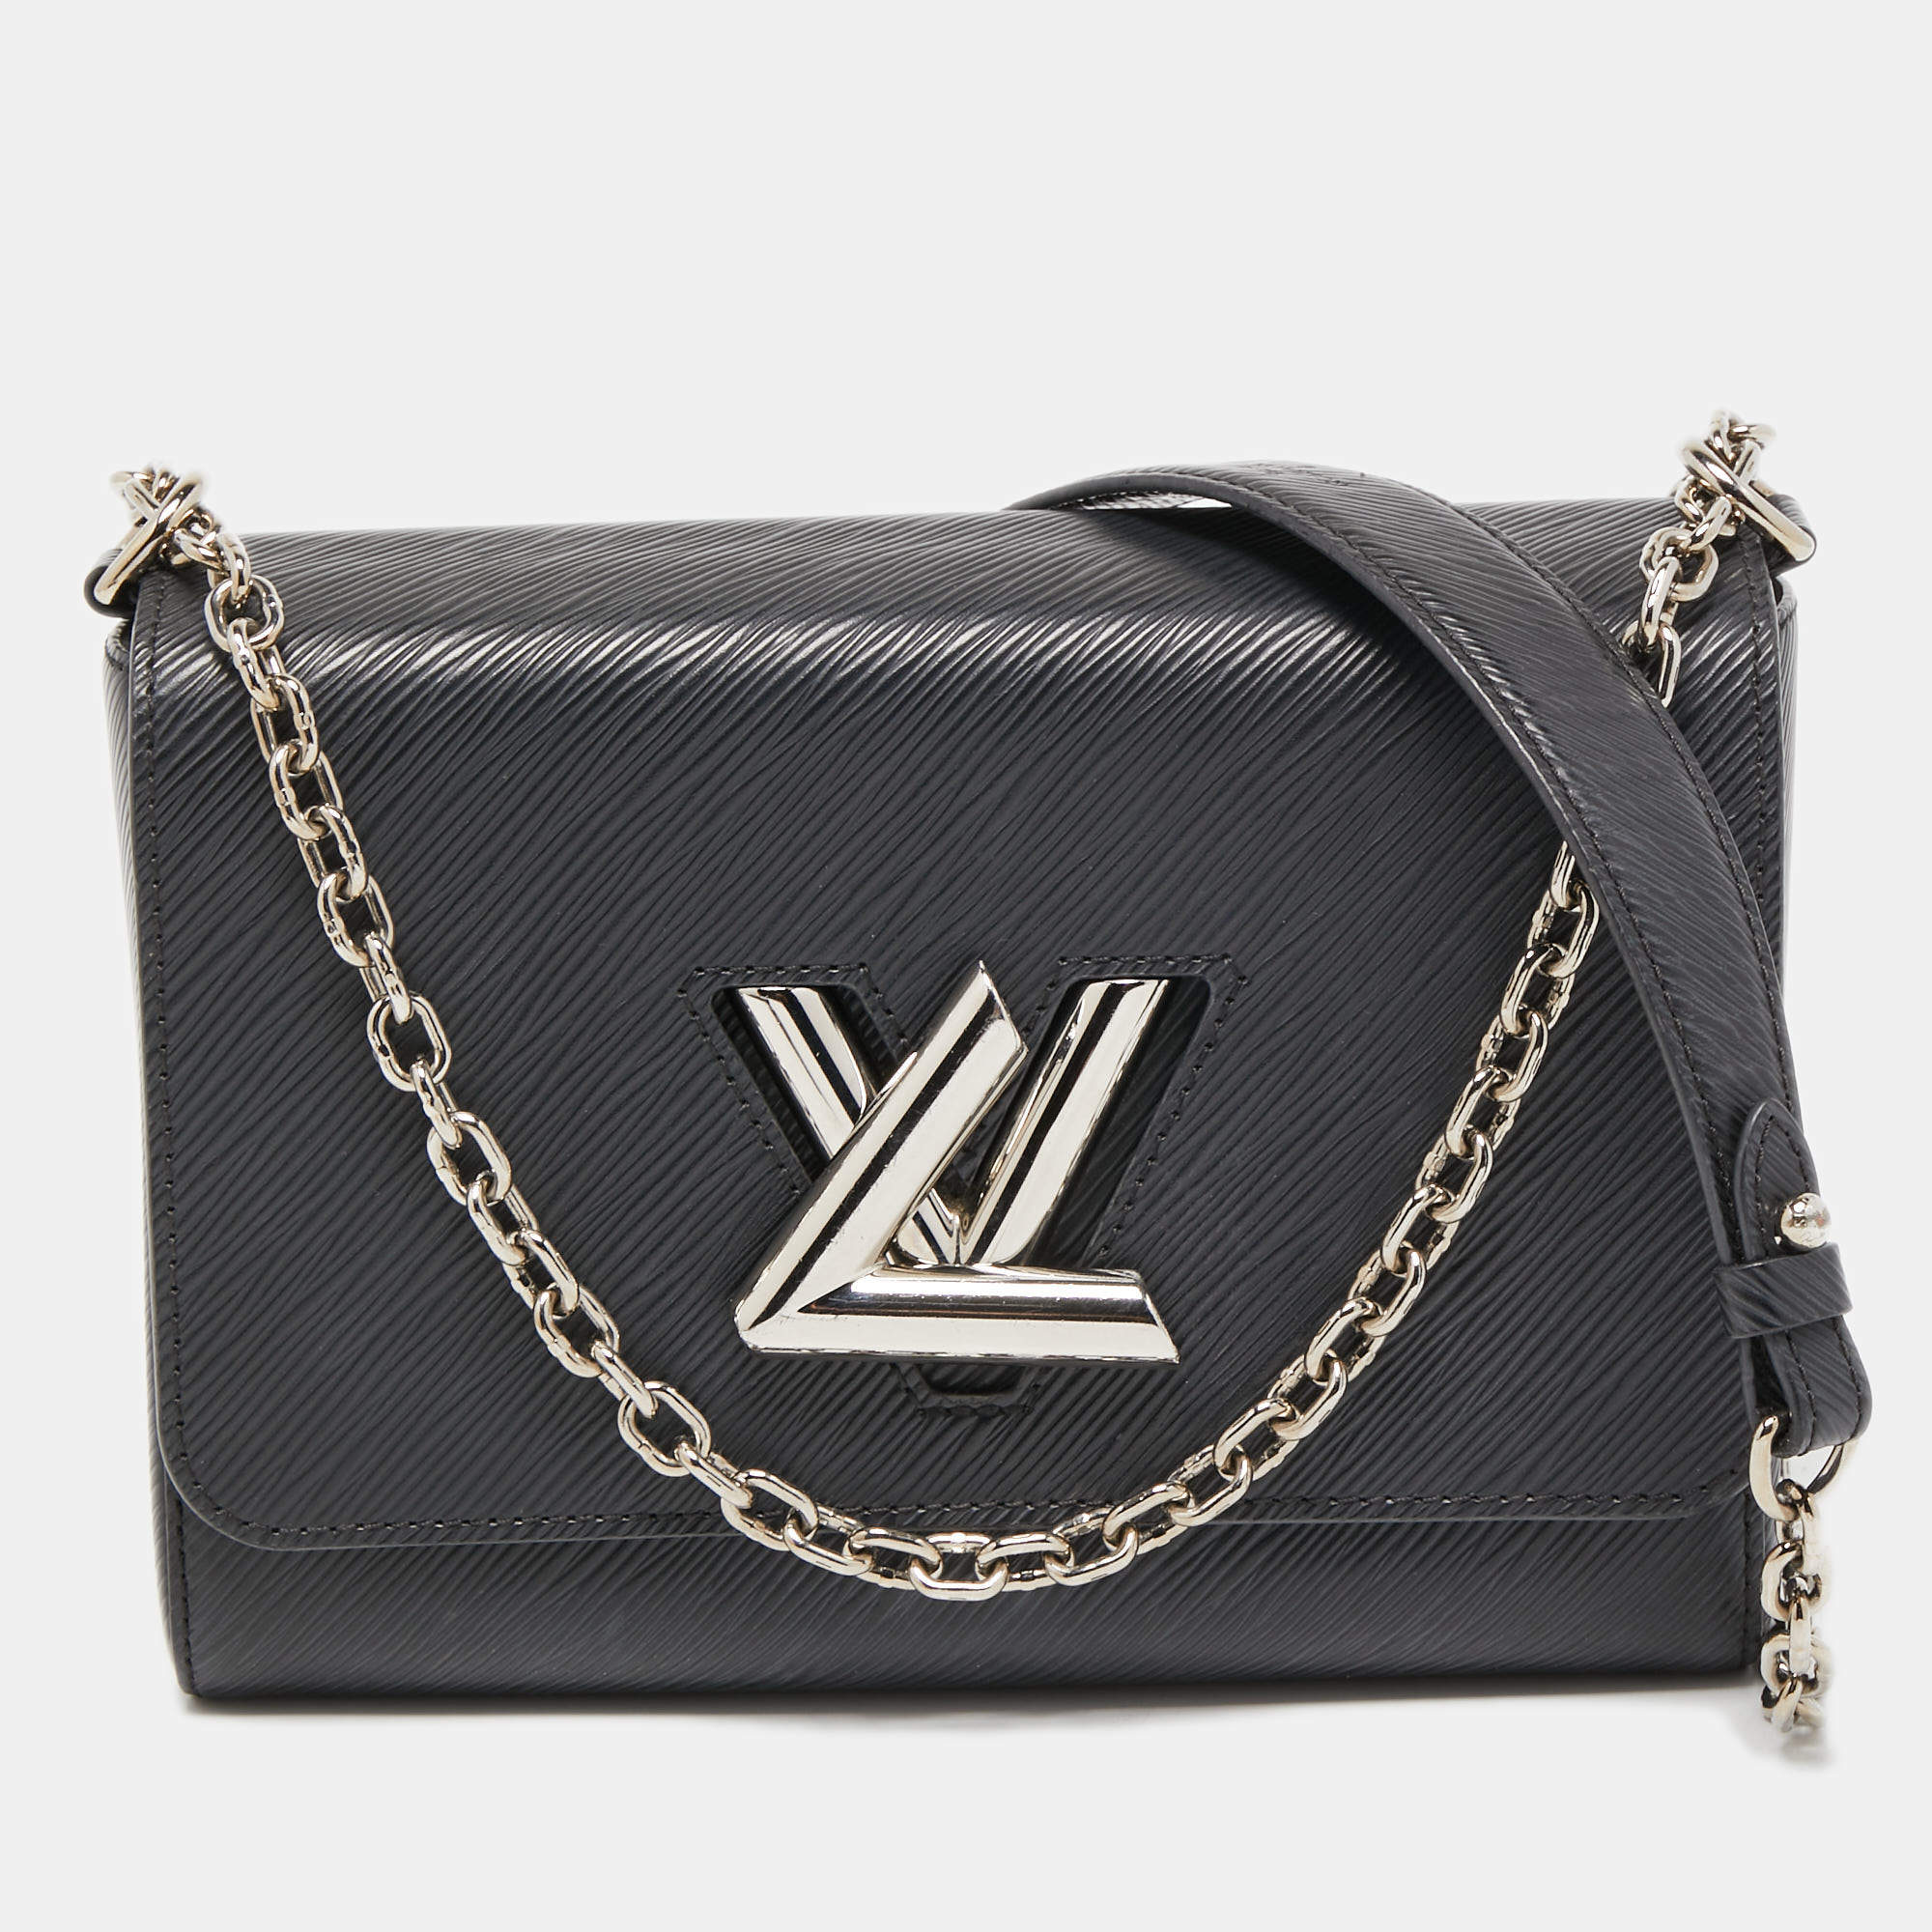 Louis Vuitton Twist mm Padded Lambskin Leather Shoulder Bag